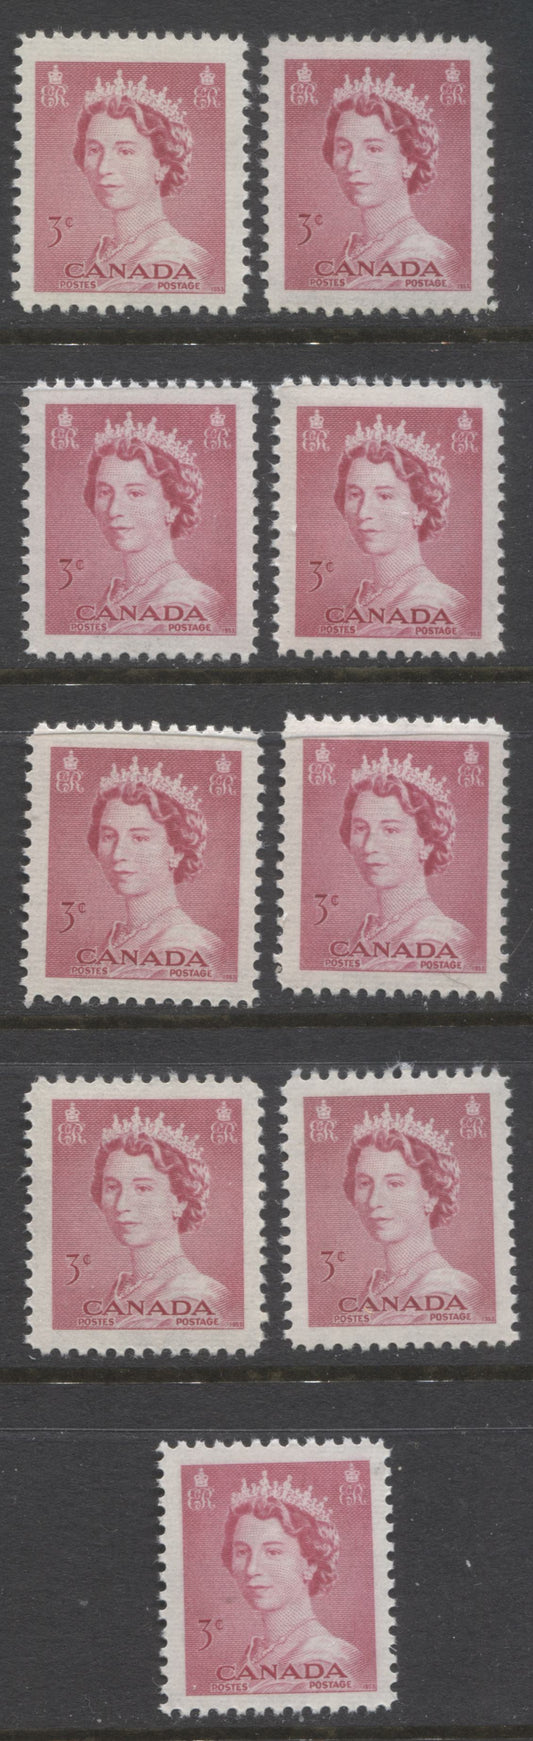 Lot 245 Canada #327 3c Cerise Queen Elizabeth II, 1953-1954 Karsh Issue, 9 VFNH Singles, Various Shades, Different Perfs